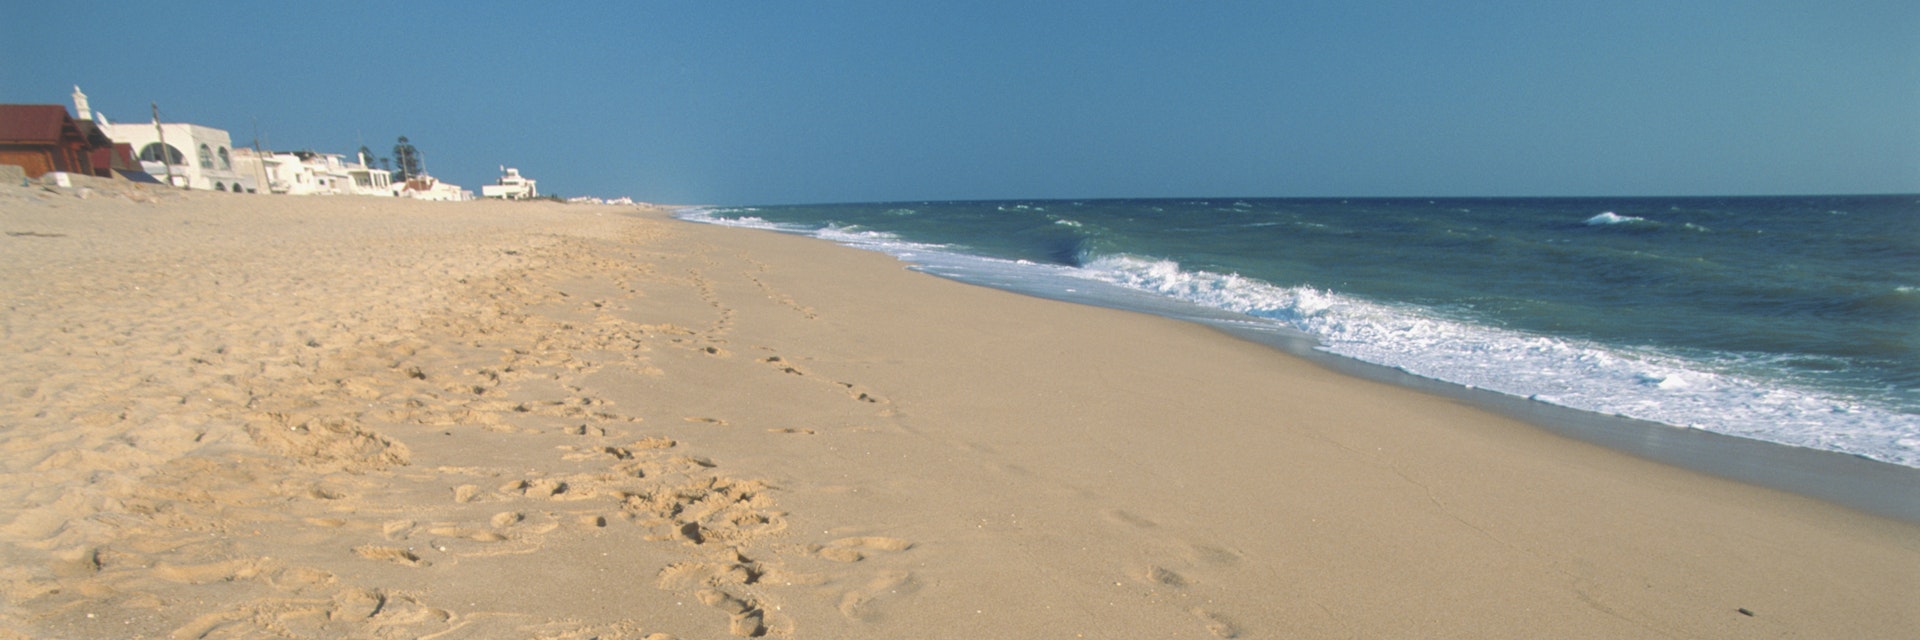 Portugal, Algarve, Ilha de Faro, footprints on sandy beach